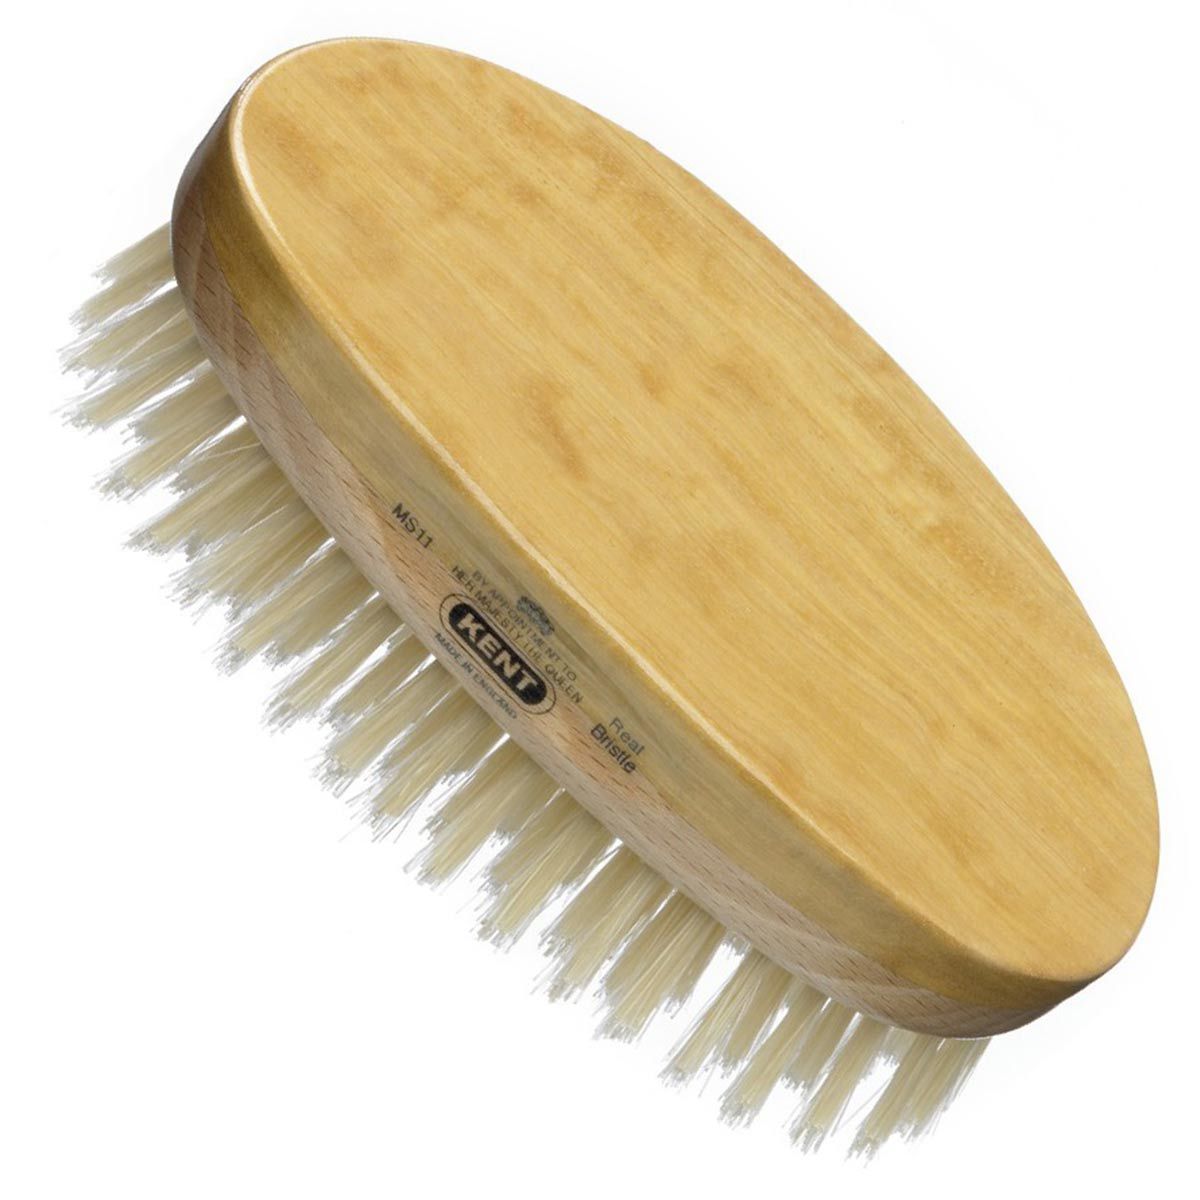 Primary image of Men's Oval Satinwood White Bristle Hairbrush - MS11